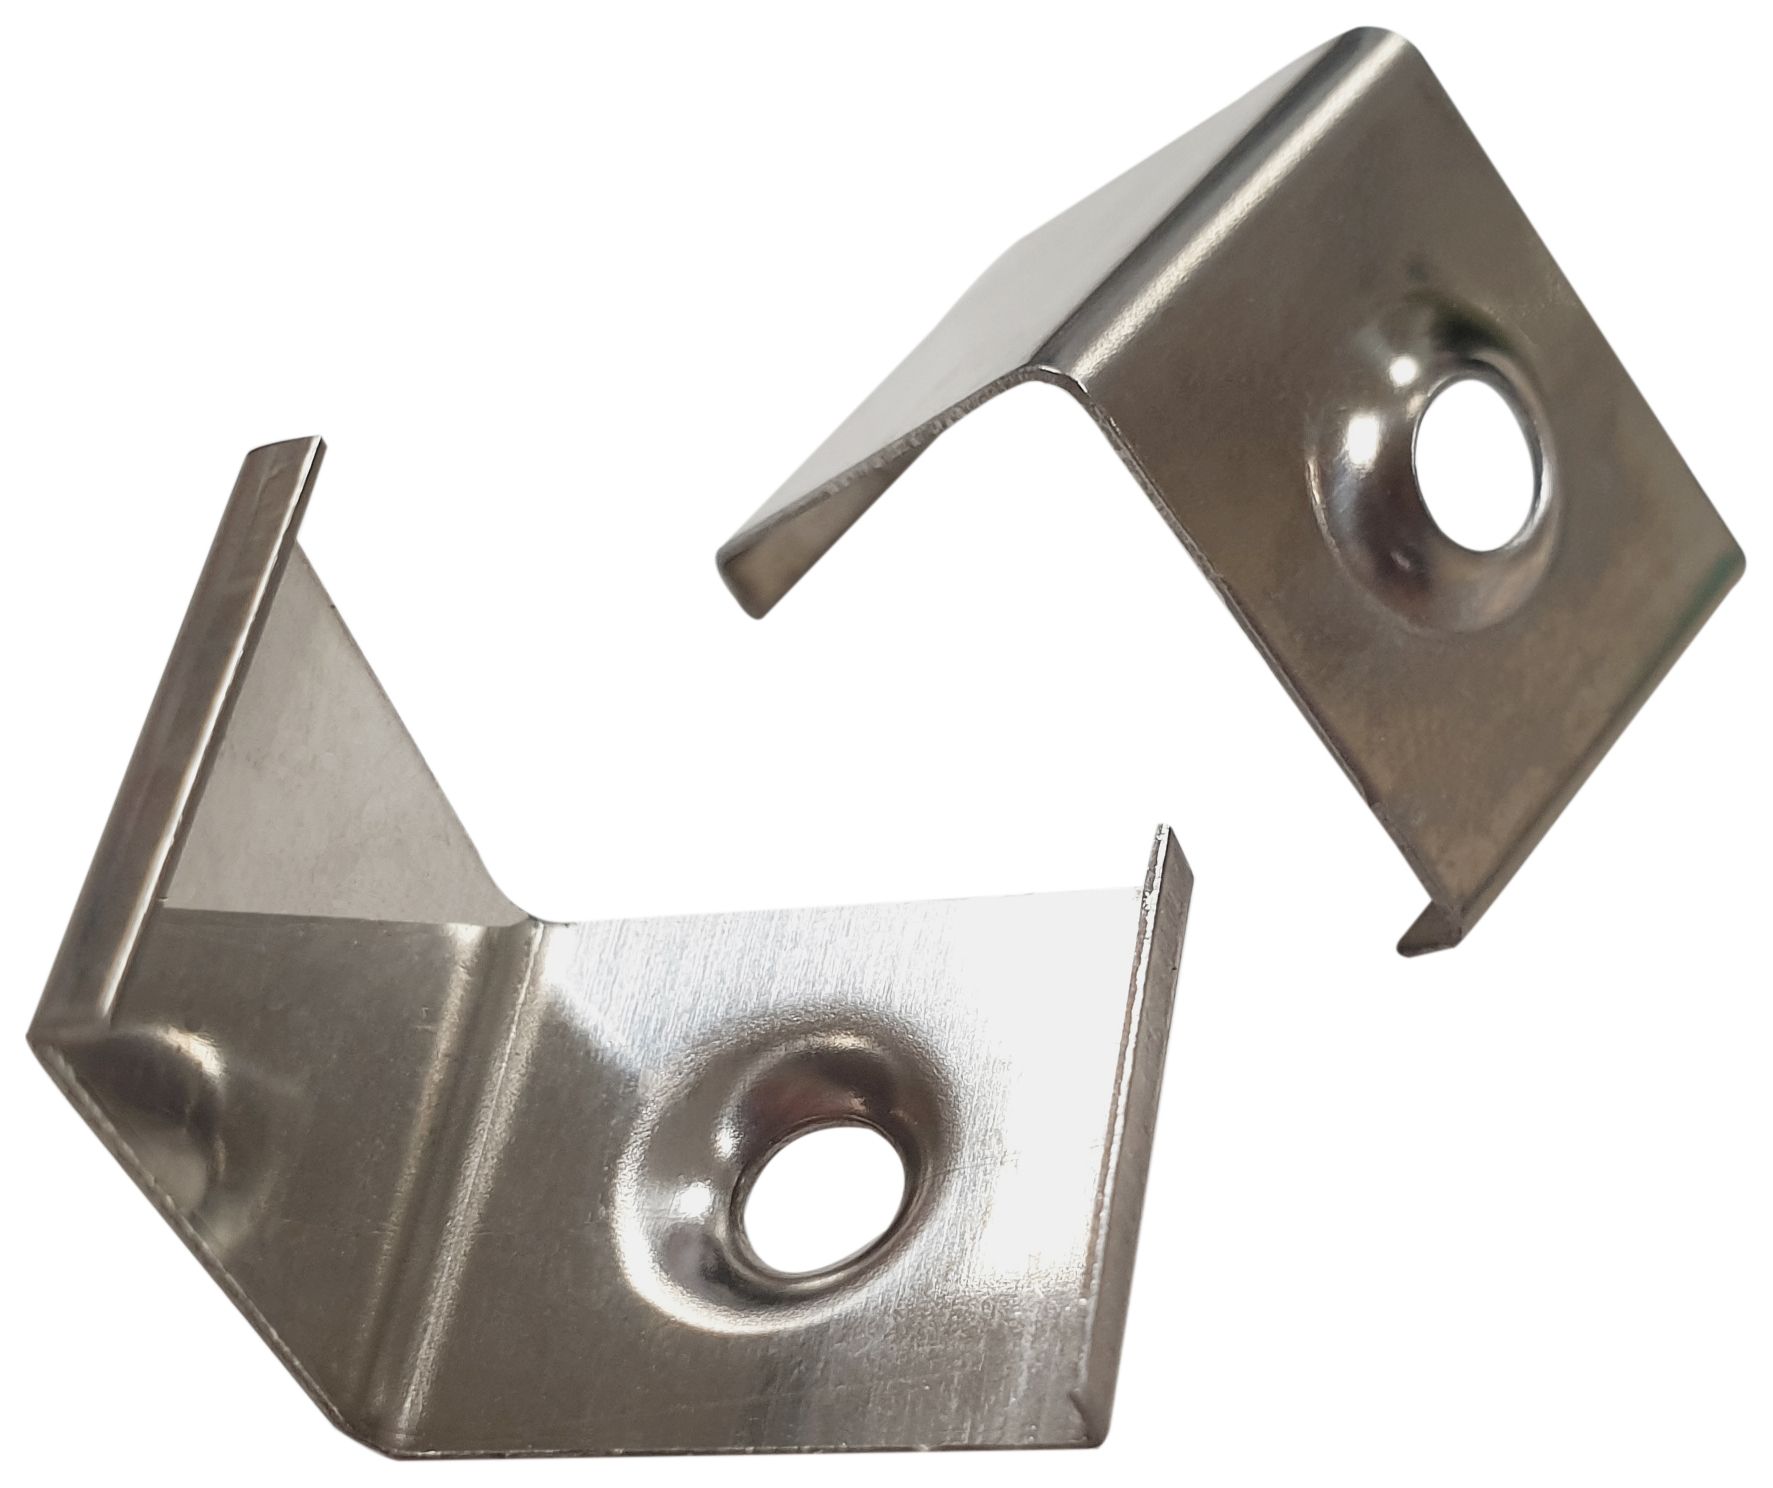 Image of Sensio Albury Mounting Brackets for Angled Profile Lighting (2 brackets)